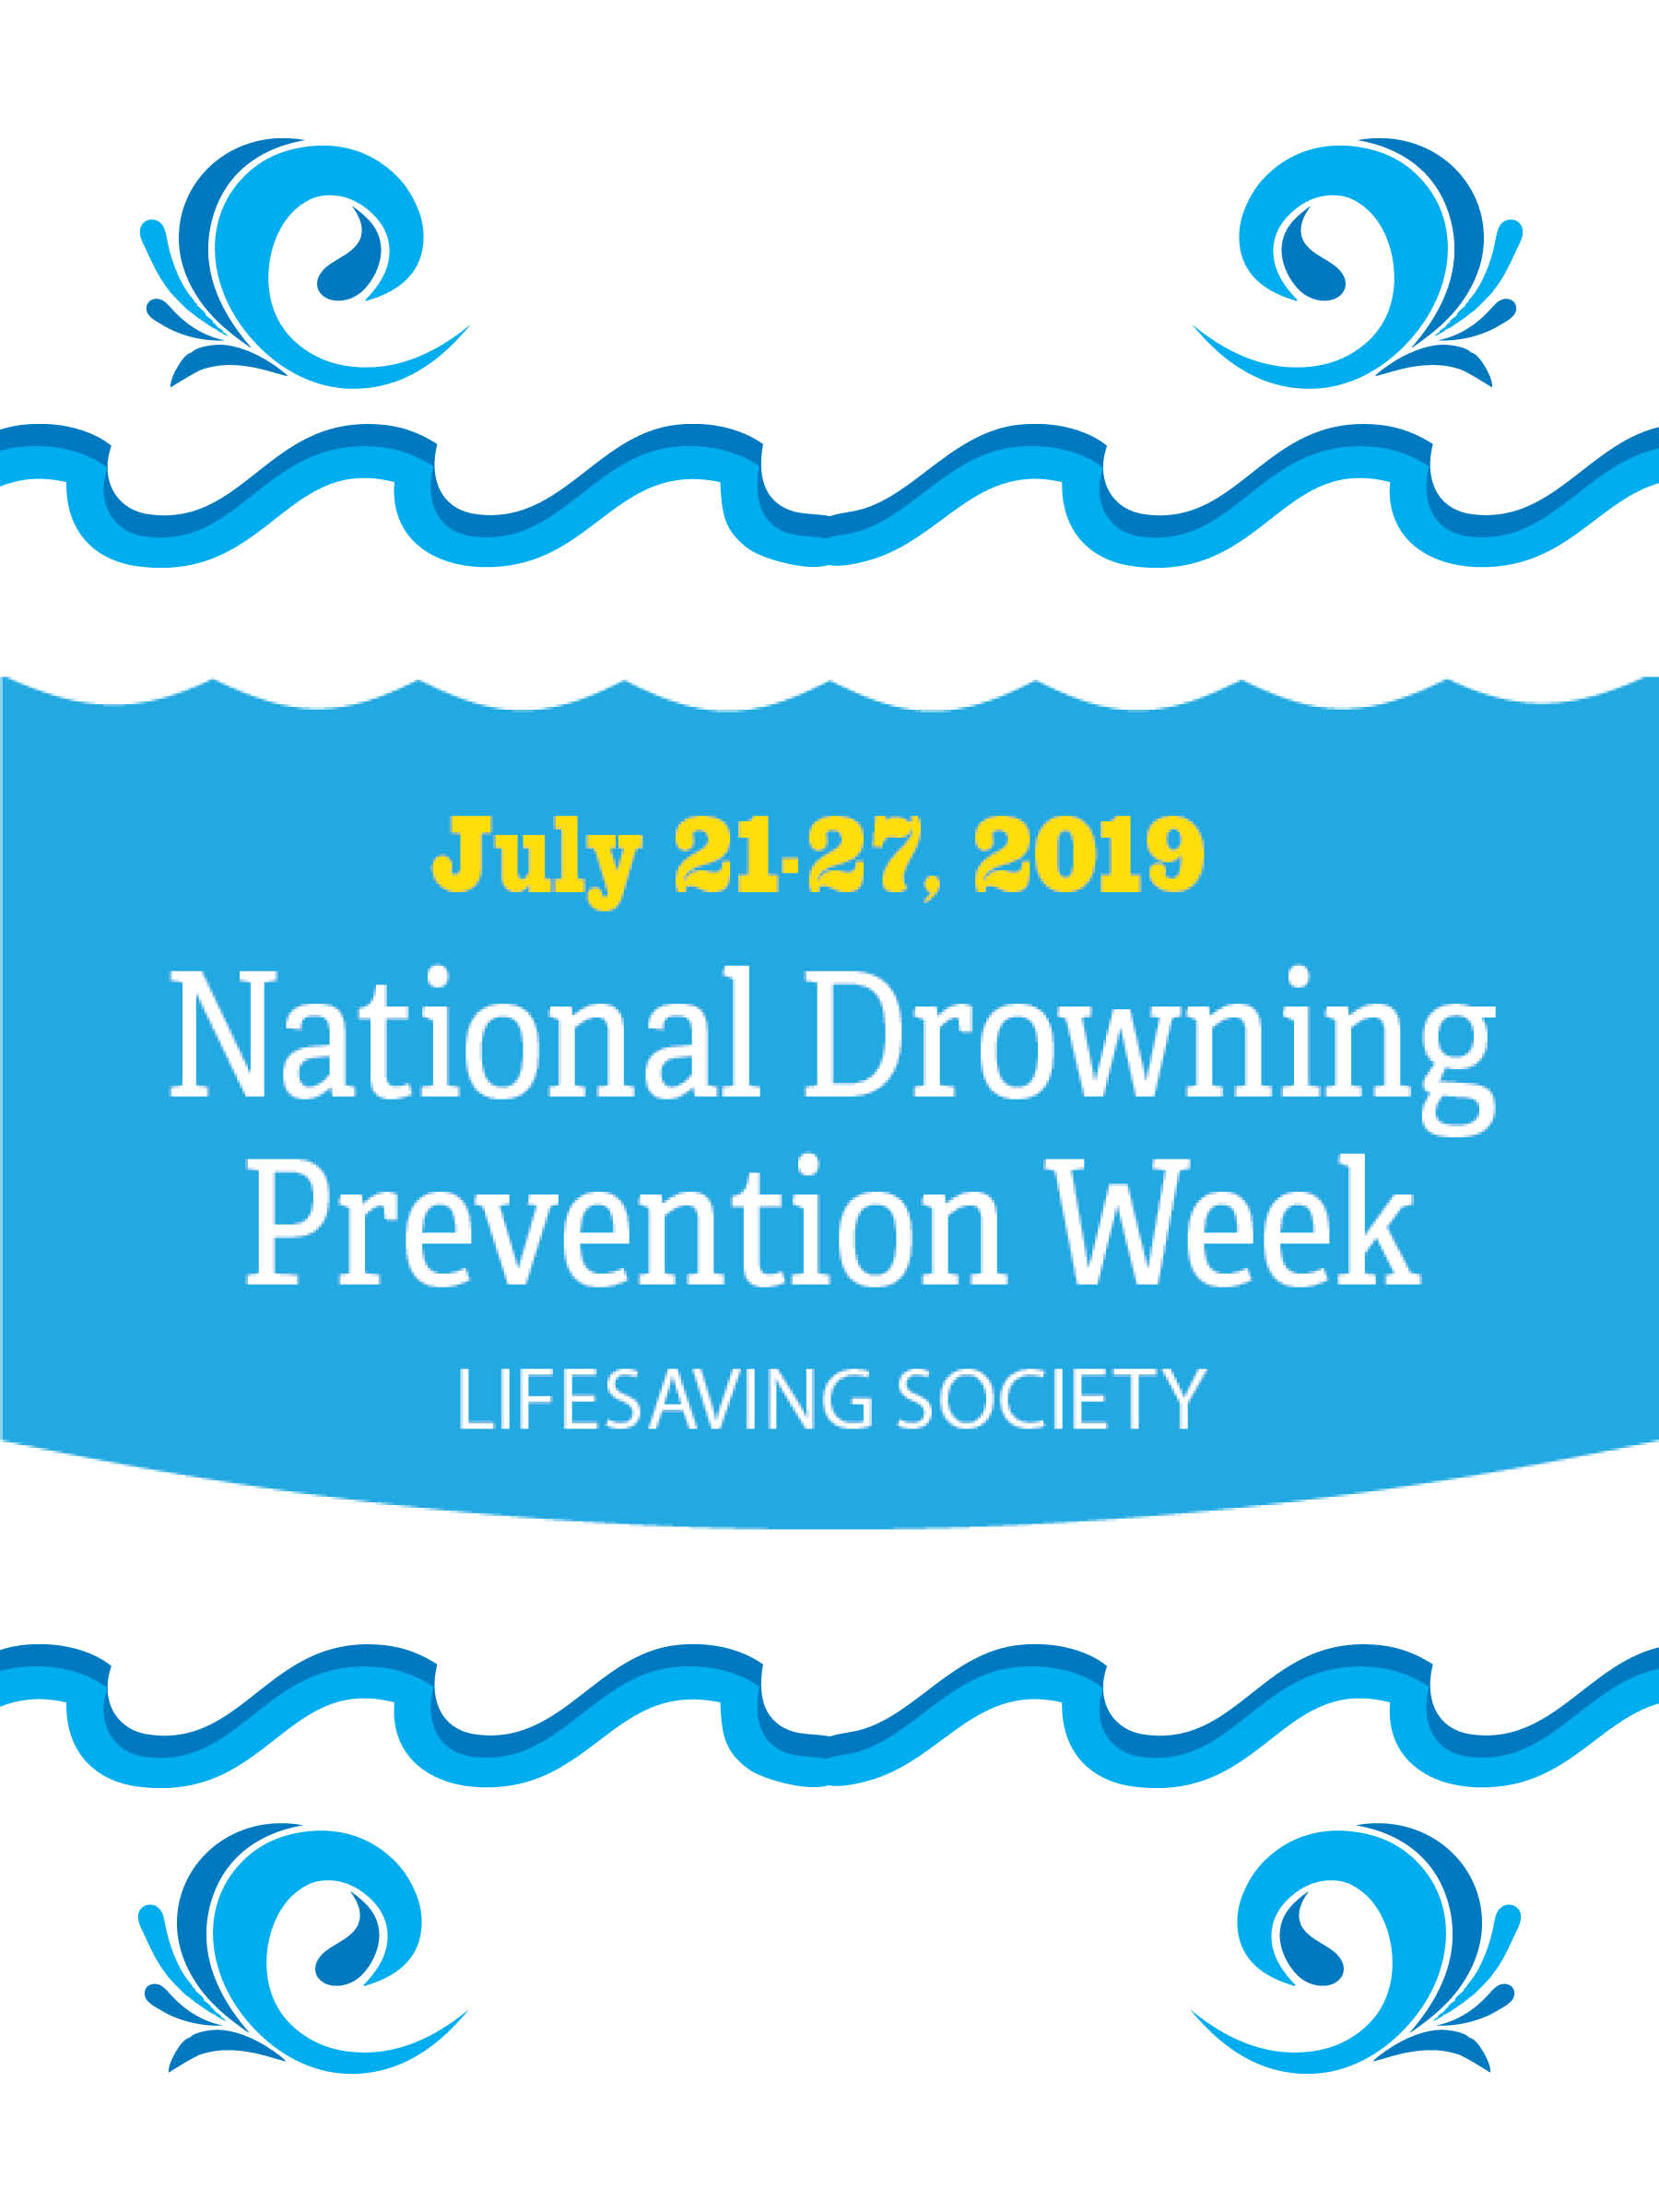 National Drowning Prevention Week Information News Lifesaving